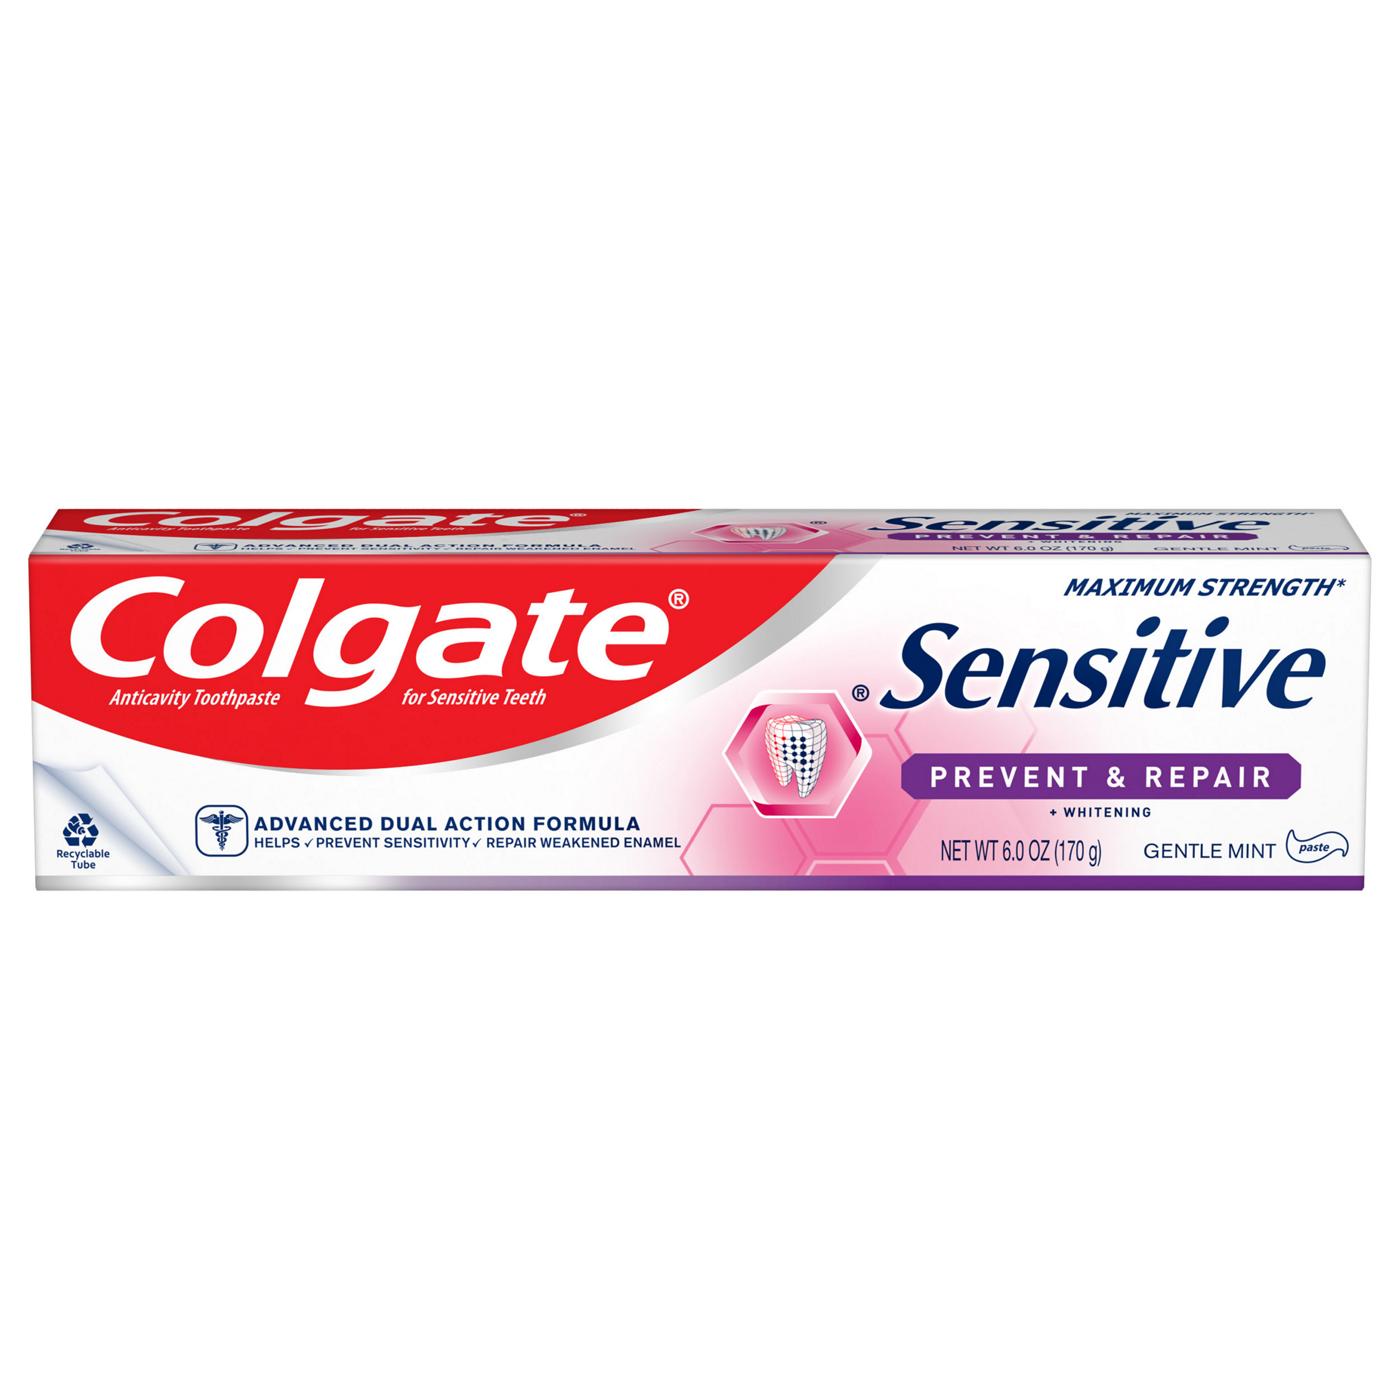 Colgate Sensitive Prevent & Repair Anticavity Toothpaste - Gentle Mint; image 1 of 3